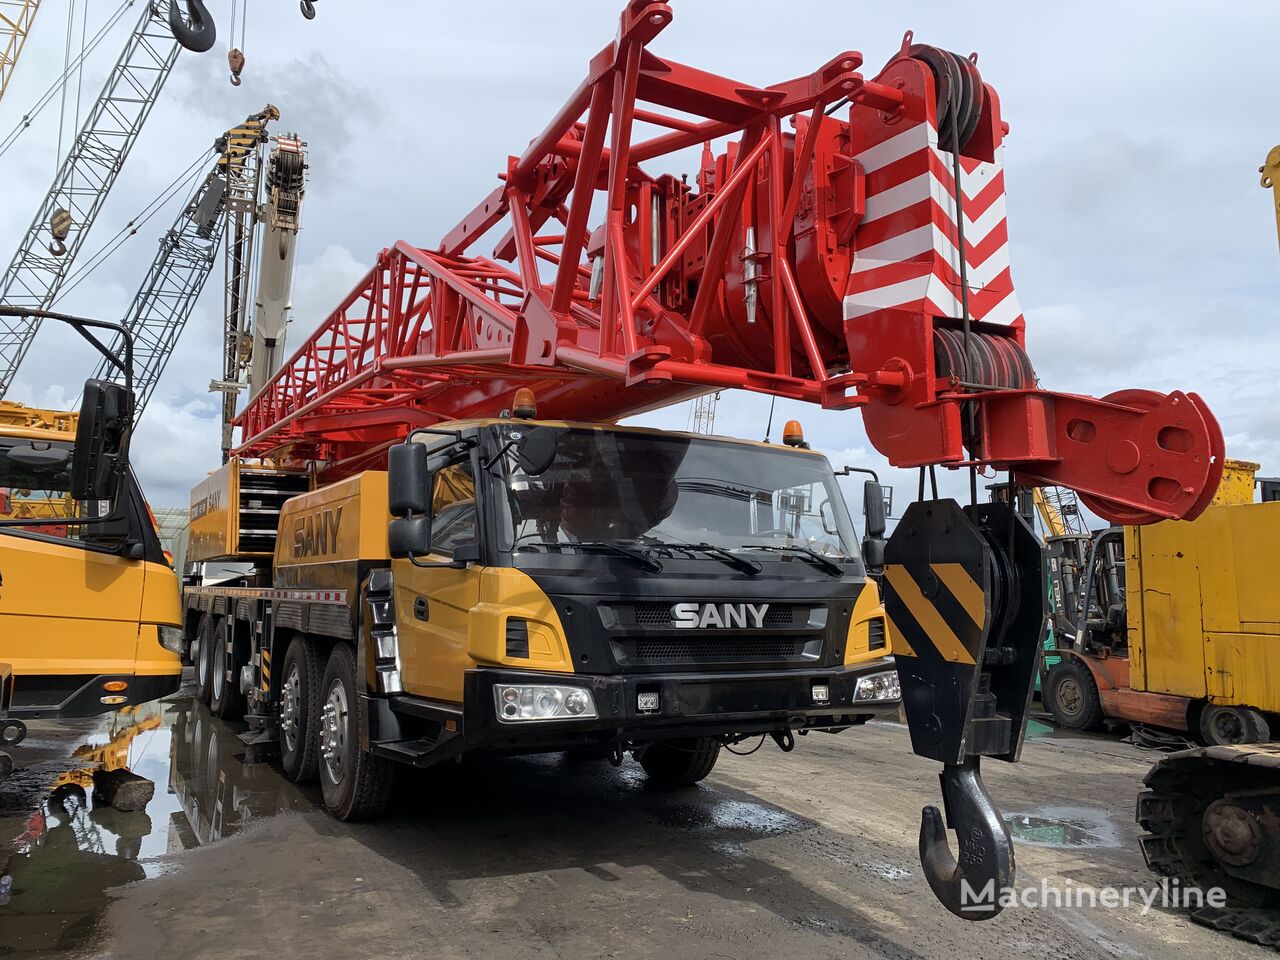 żuraw samojezdny Sany Sany STC1000 used 100 ton hydraulic mounted mobile truck crane